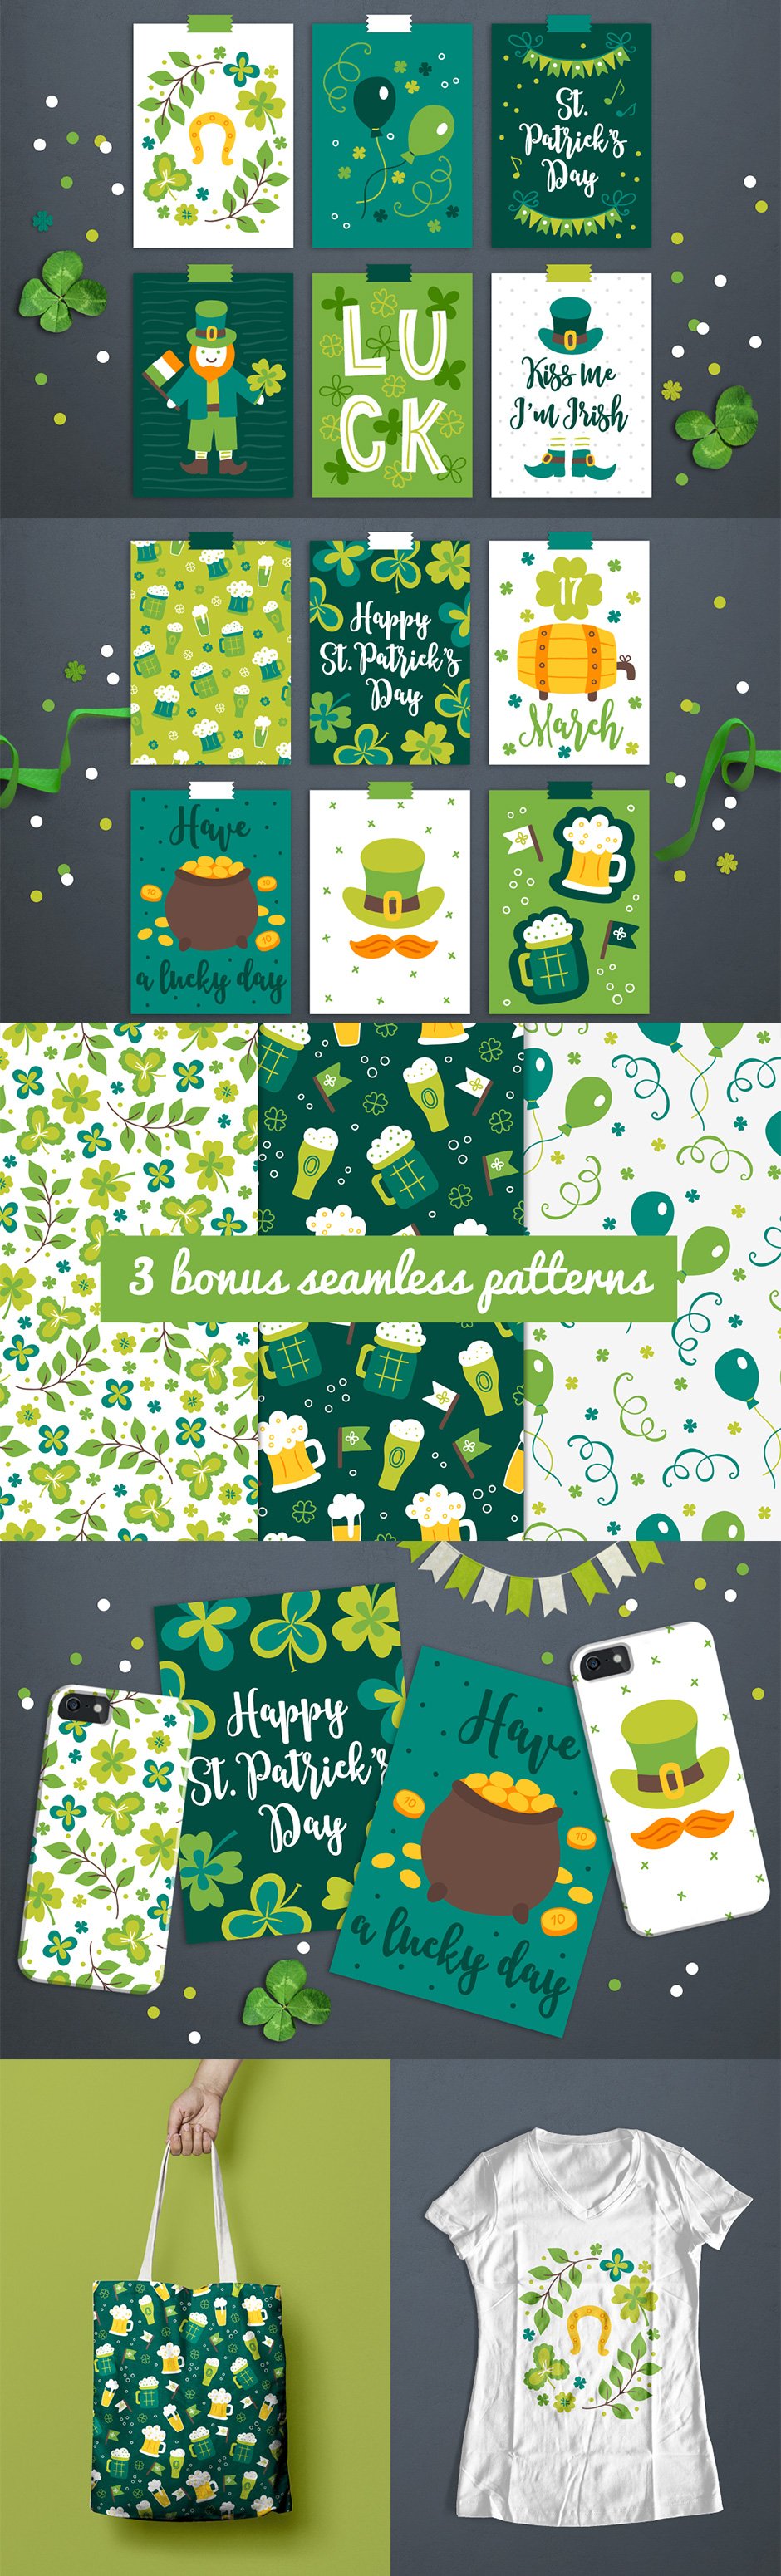 12 St Patricks Day Greeting Cards and Bonus Patterns